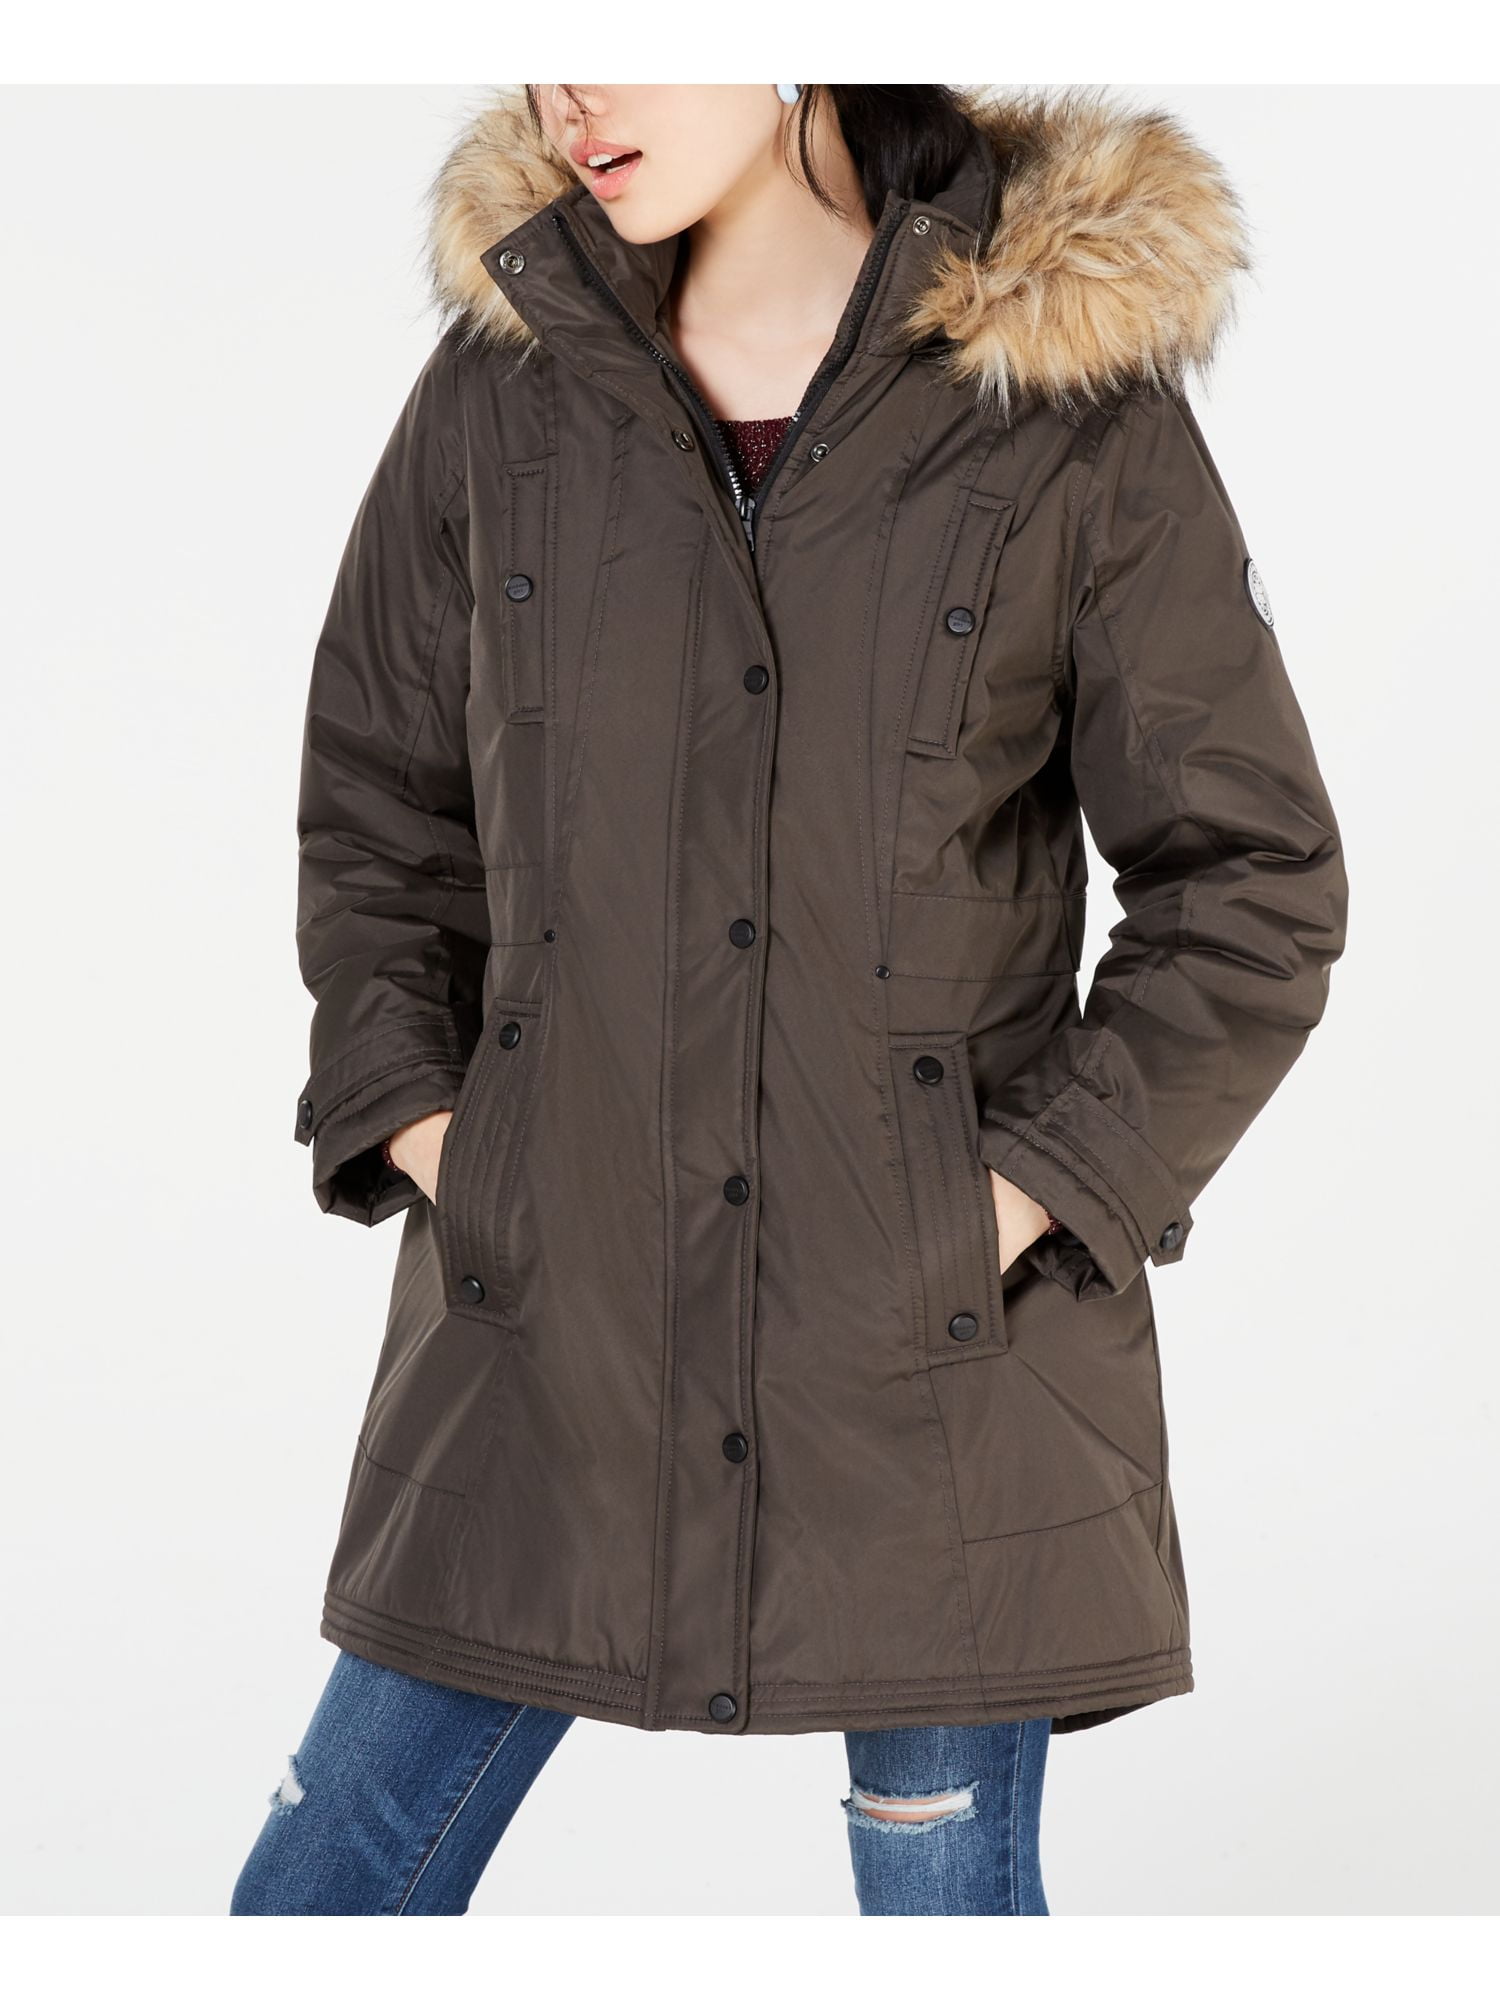 MADDEN GIRL Womens Gray Fur Hooded Parka Winter Jacket Coat Juniors S - Walmart.com